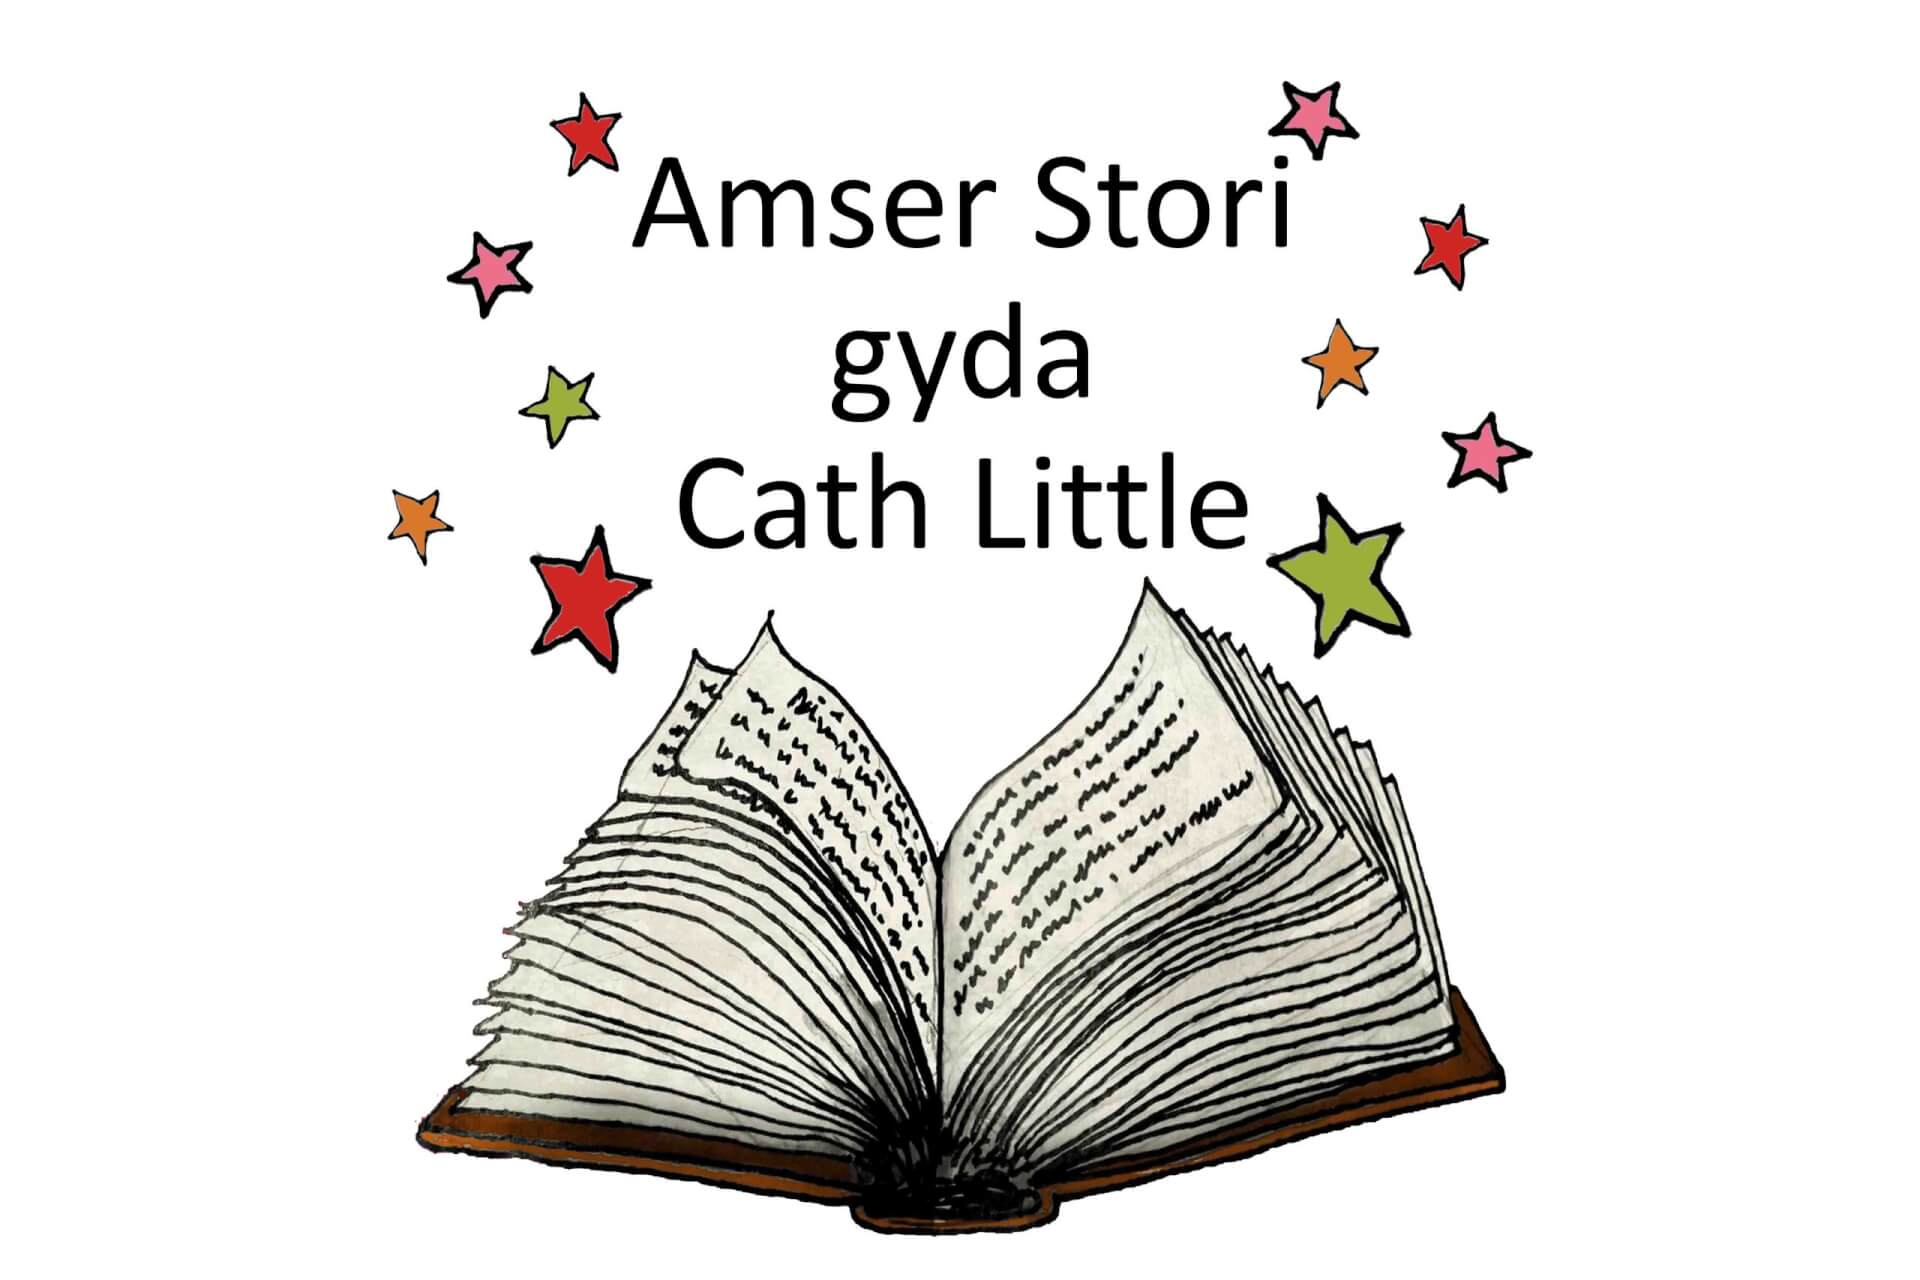 Amser Stori gyda Cath Little